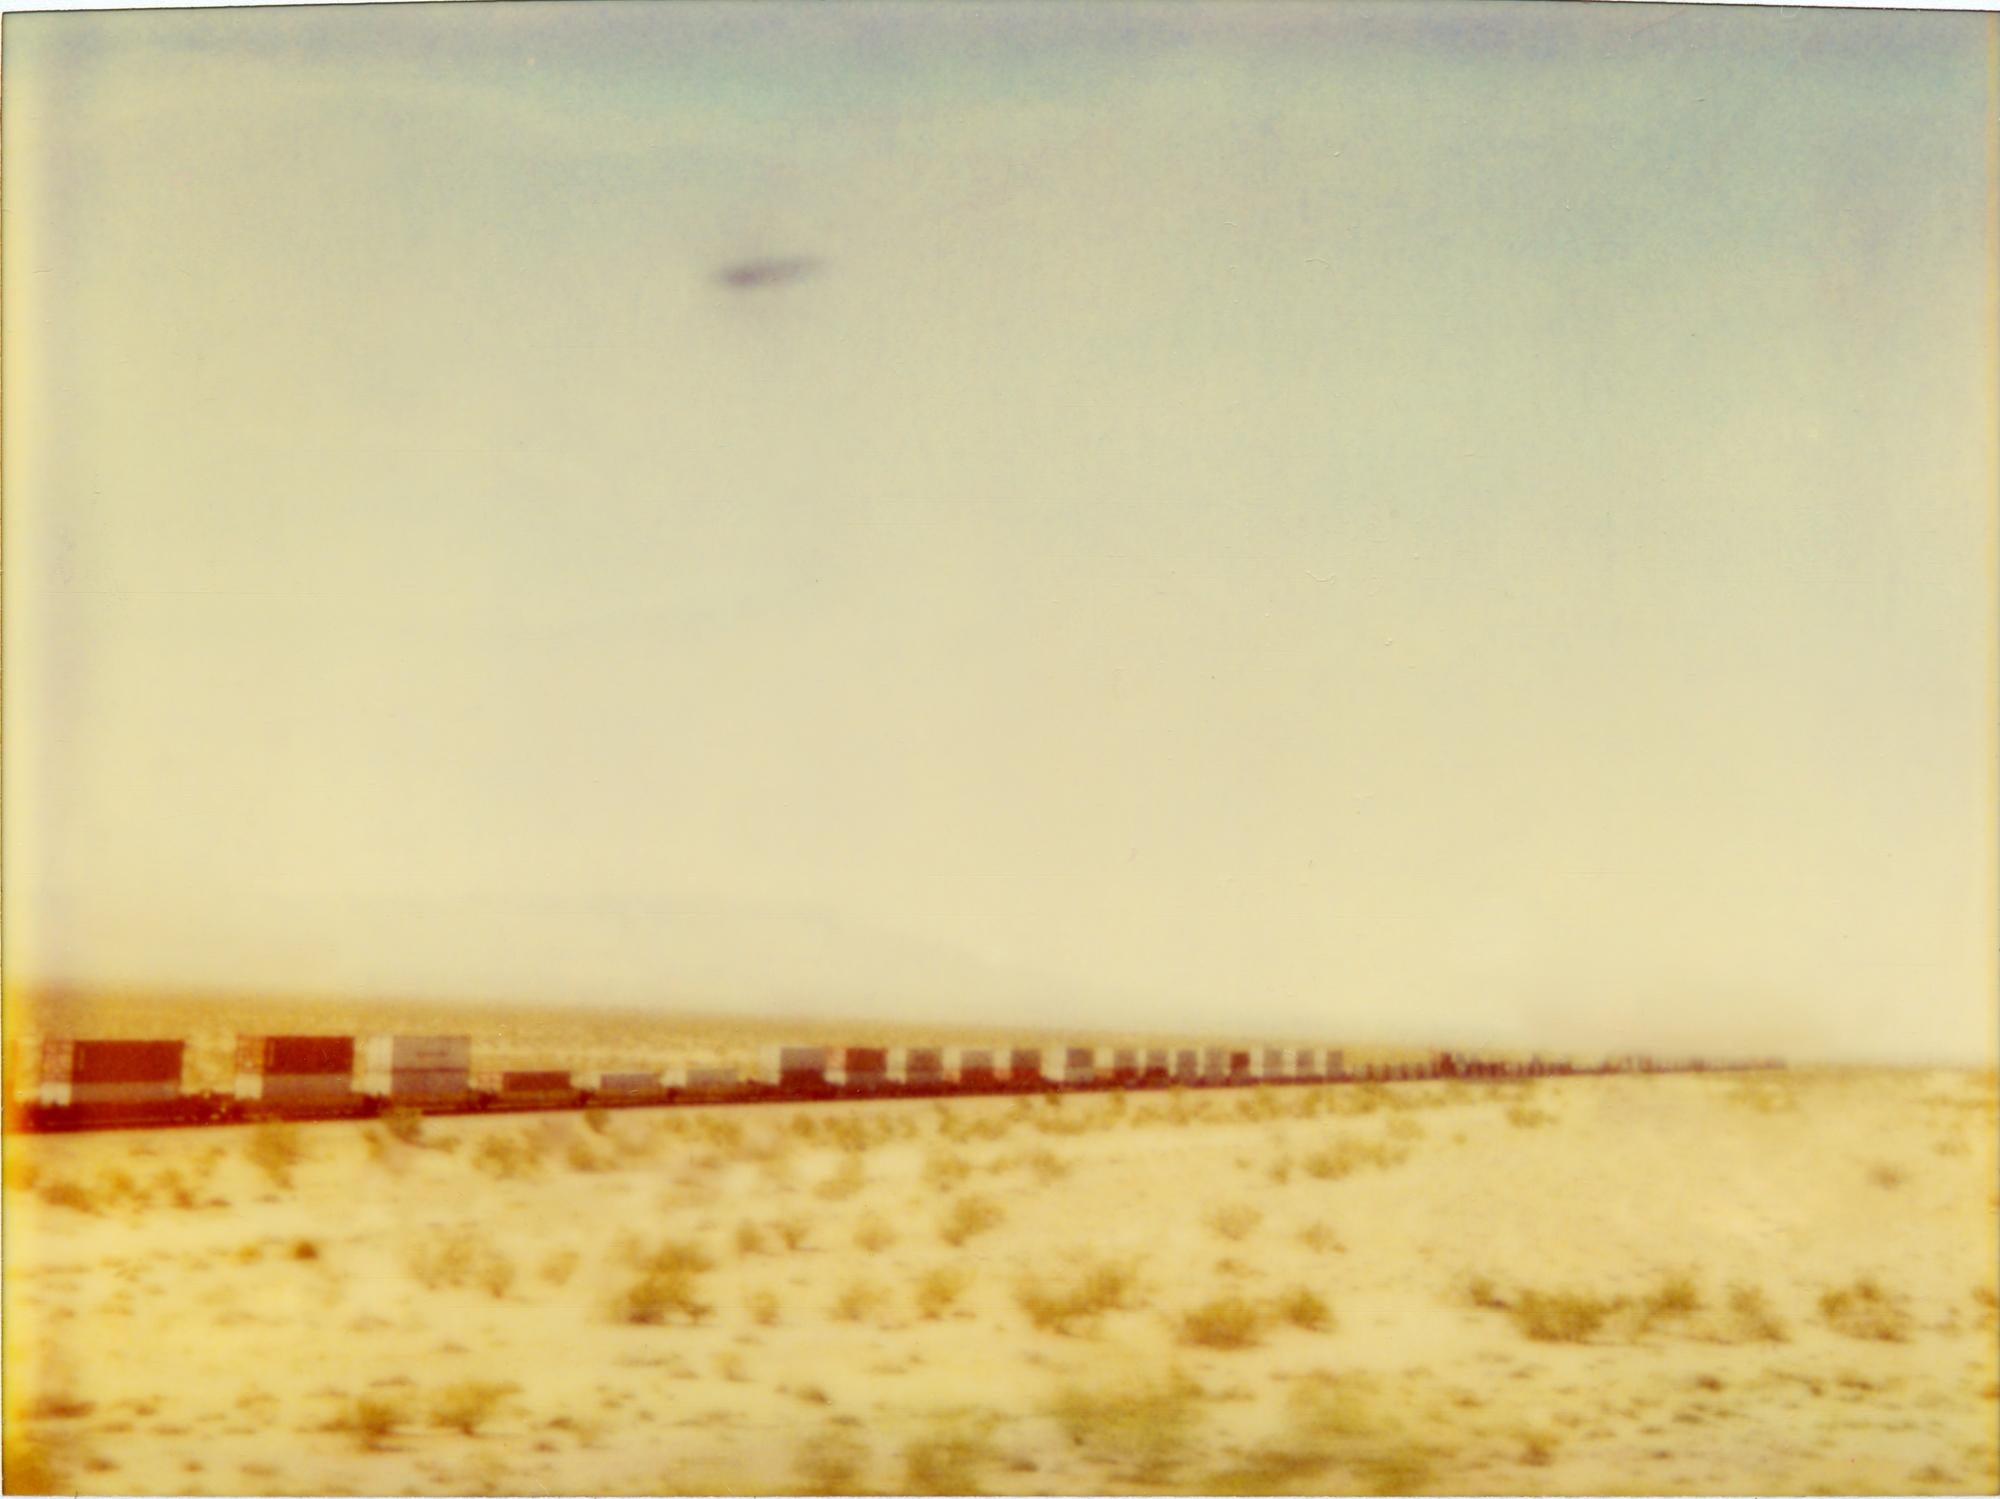 Train crosses Plain (Wastelands) - analog hand-print, mounted - Polaroid, Color